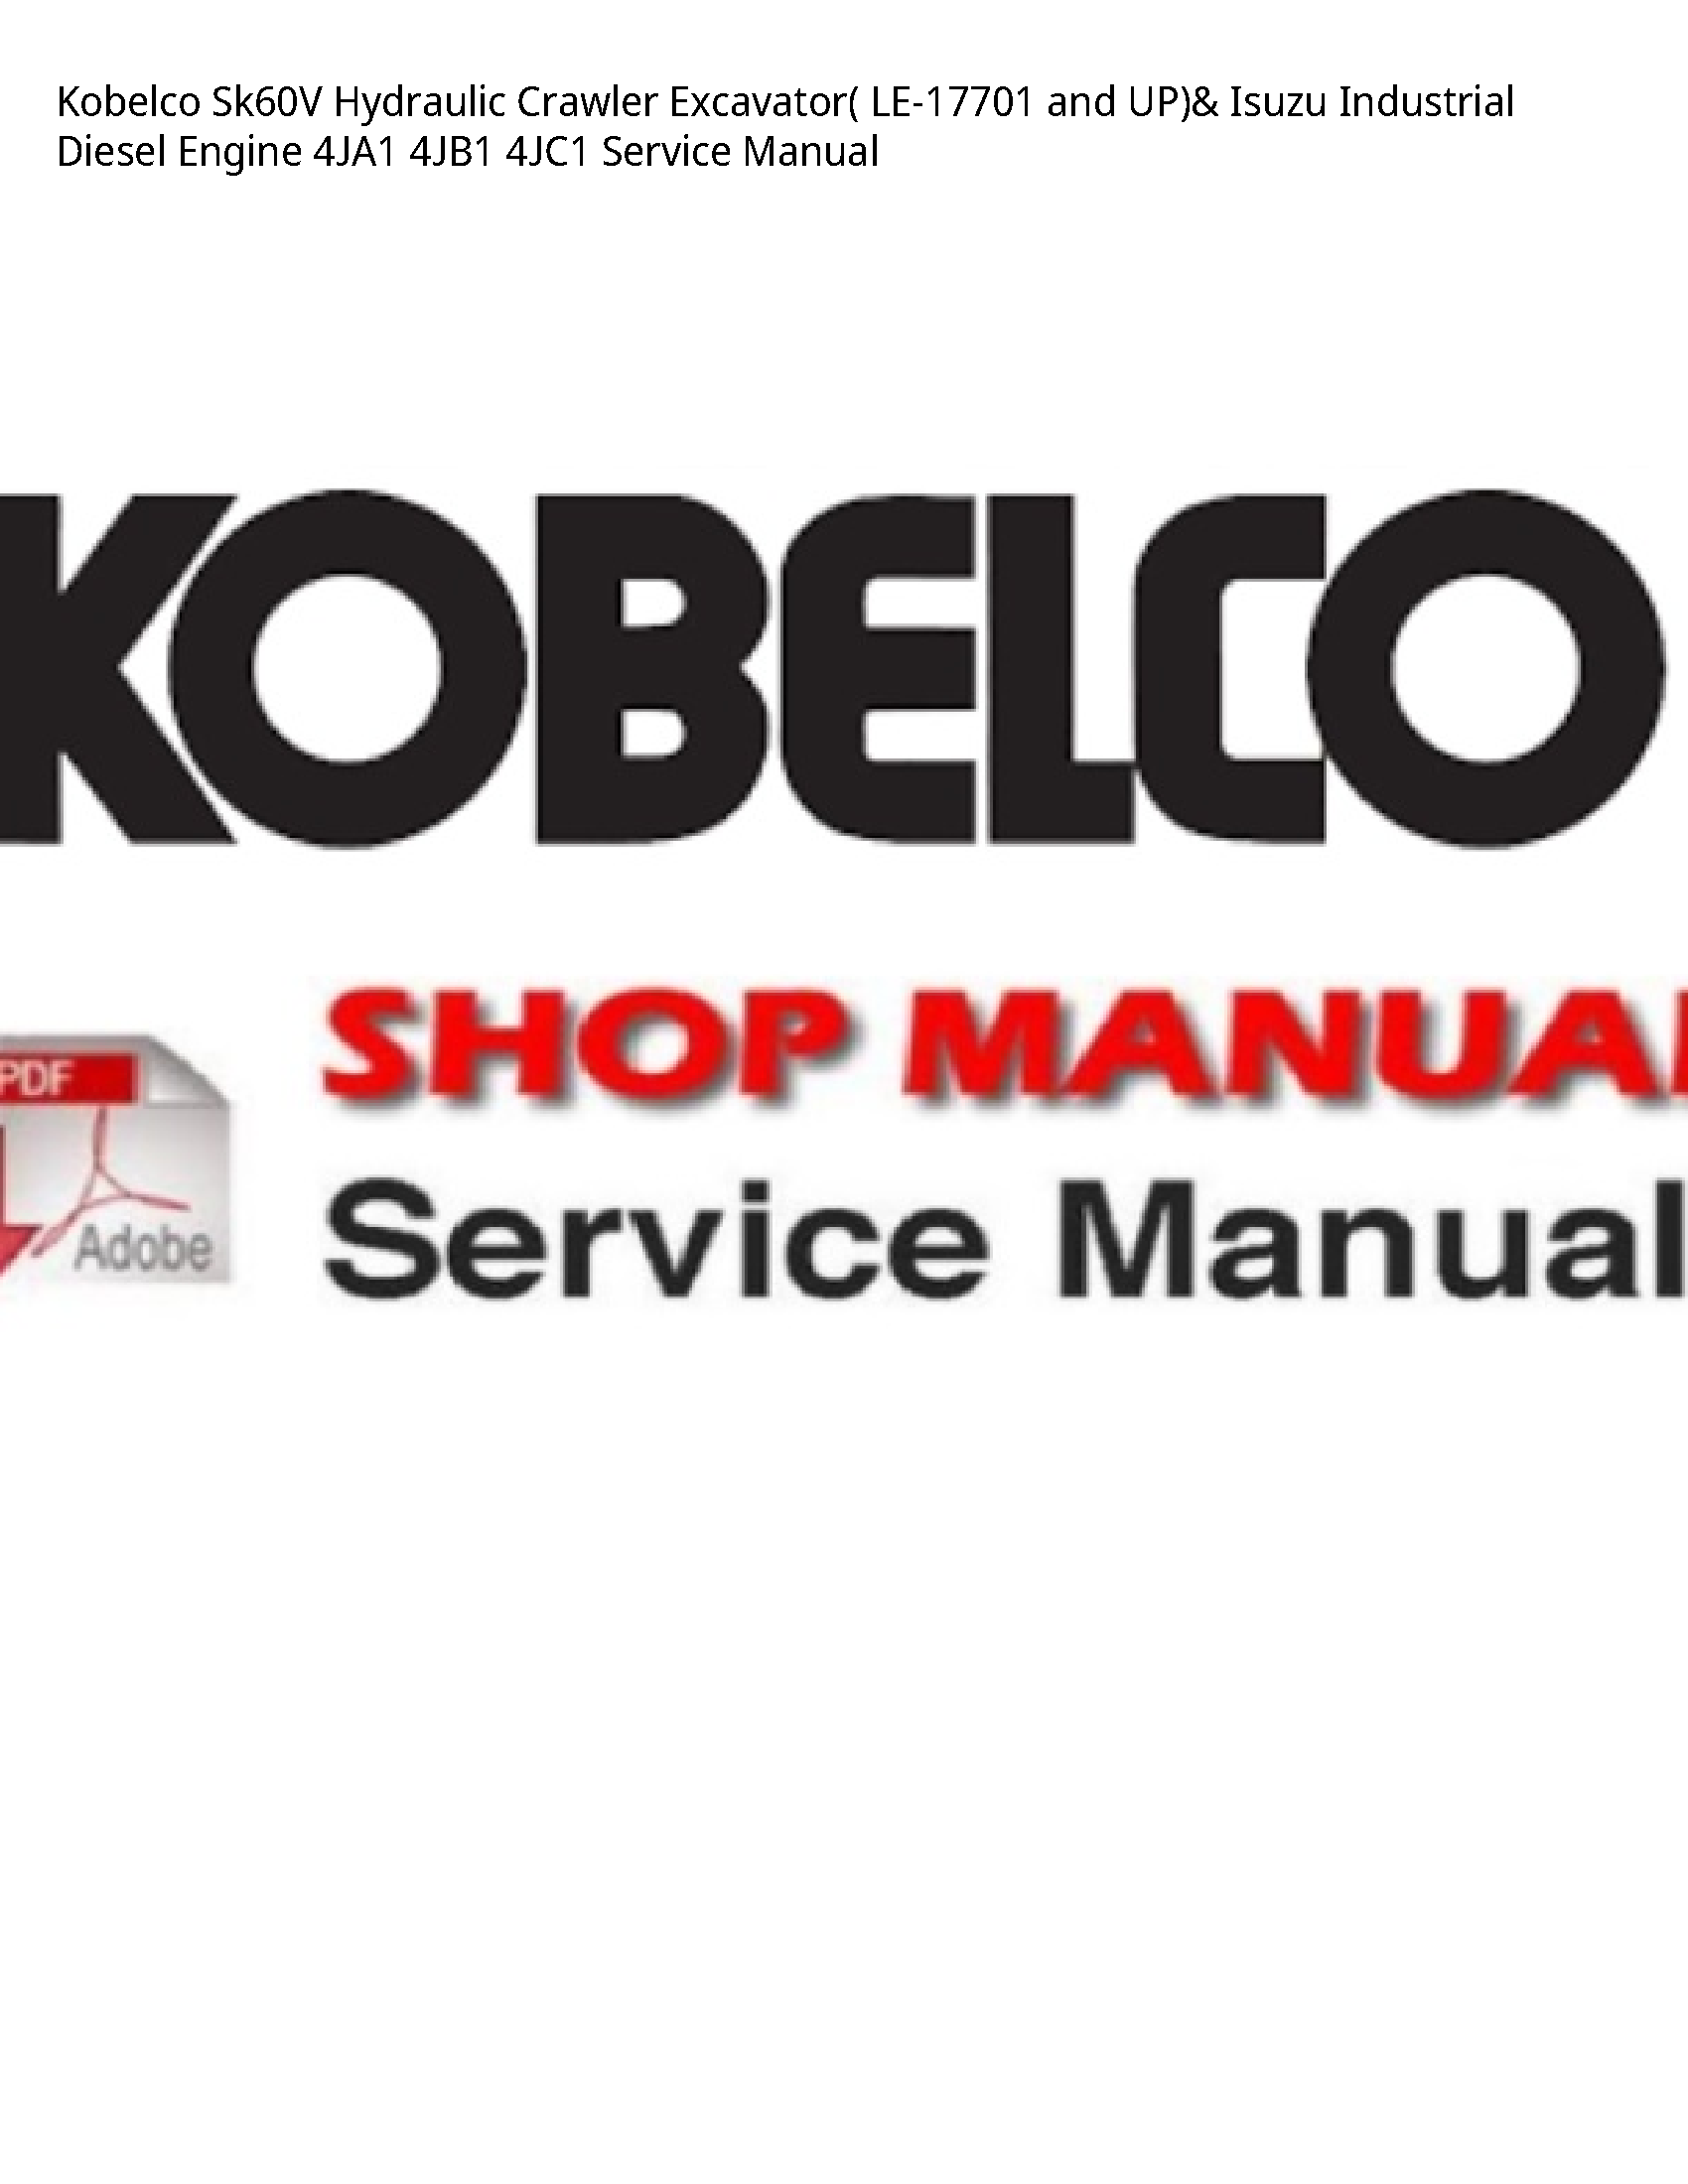 Kobelco Sk60V Hydraulic Crawler Excavator( LE-17701 and UP)& Isuzu Industrial Diesel Engine 4JA1 4JB1 4JC1 Service Manual